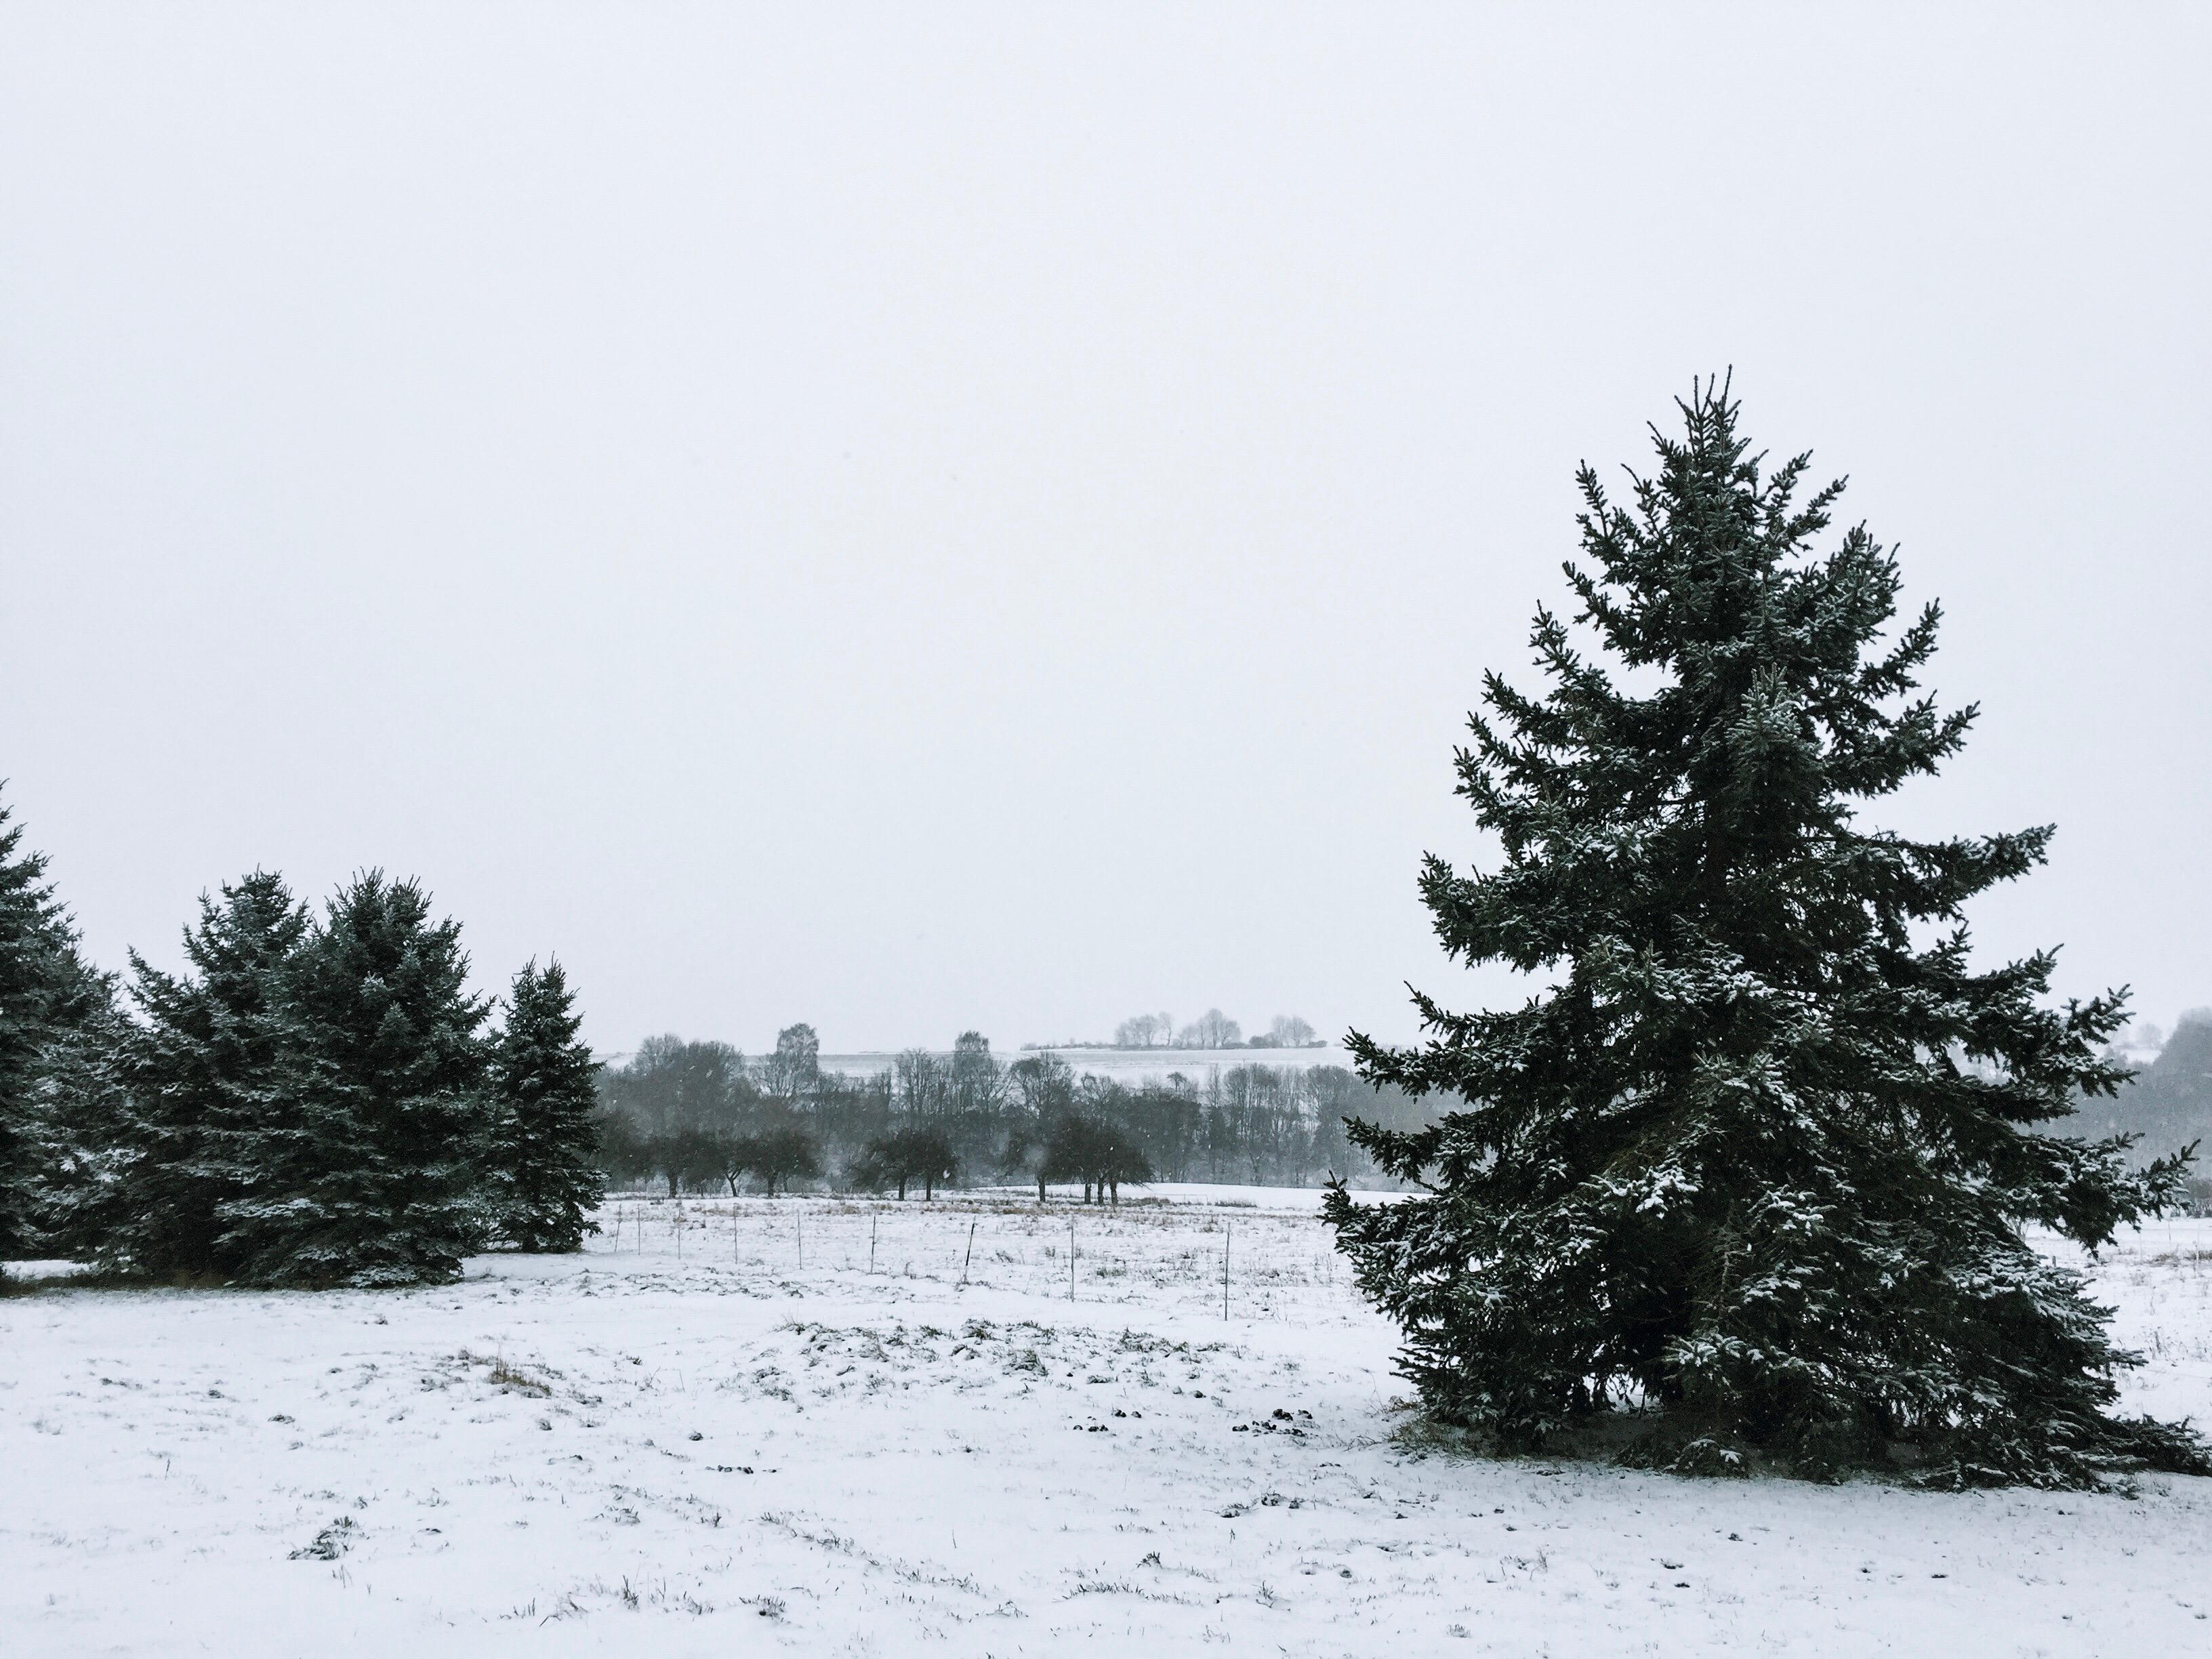 Winterwonderland. #winter #snow #nature #winterwonderland #christmas #christmastree